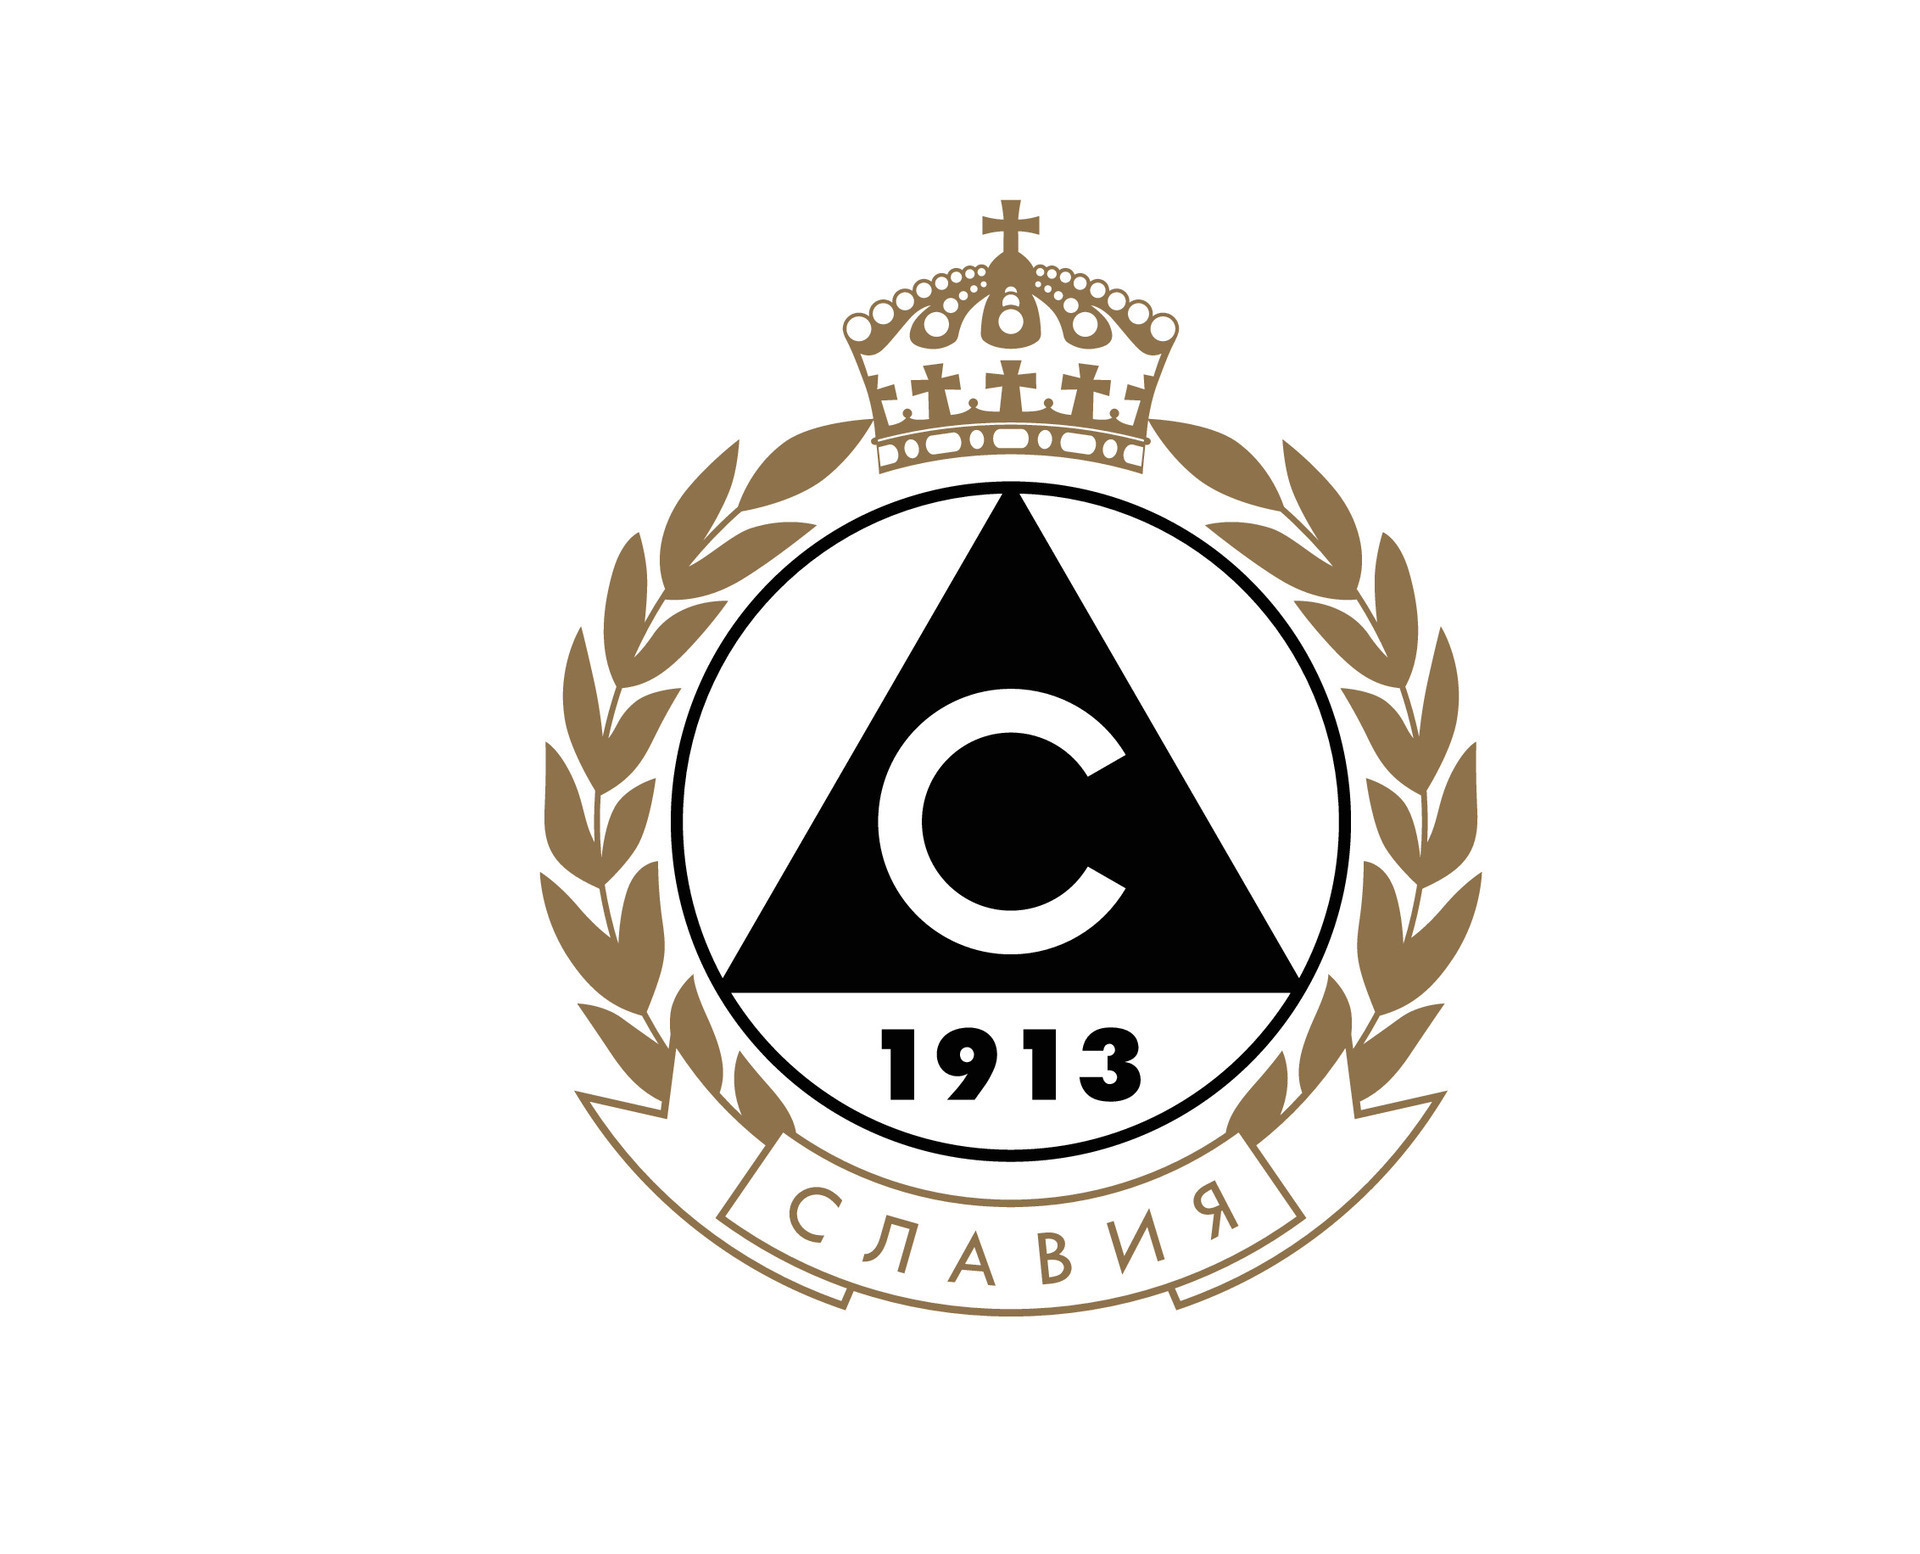 Slavia Prague Club Logo Symbol Czech Republic League Football Abstract  Design Vector Illustration 29952032 Vector Art at Vecteezy